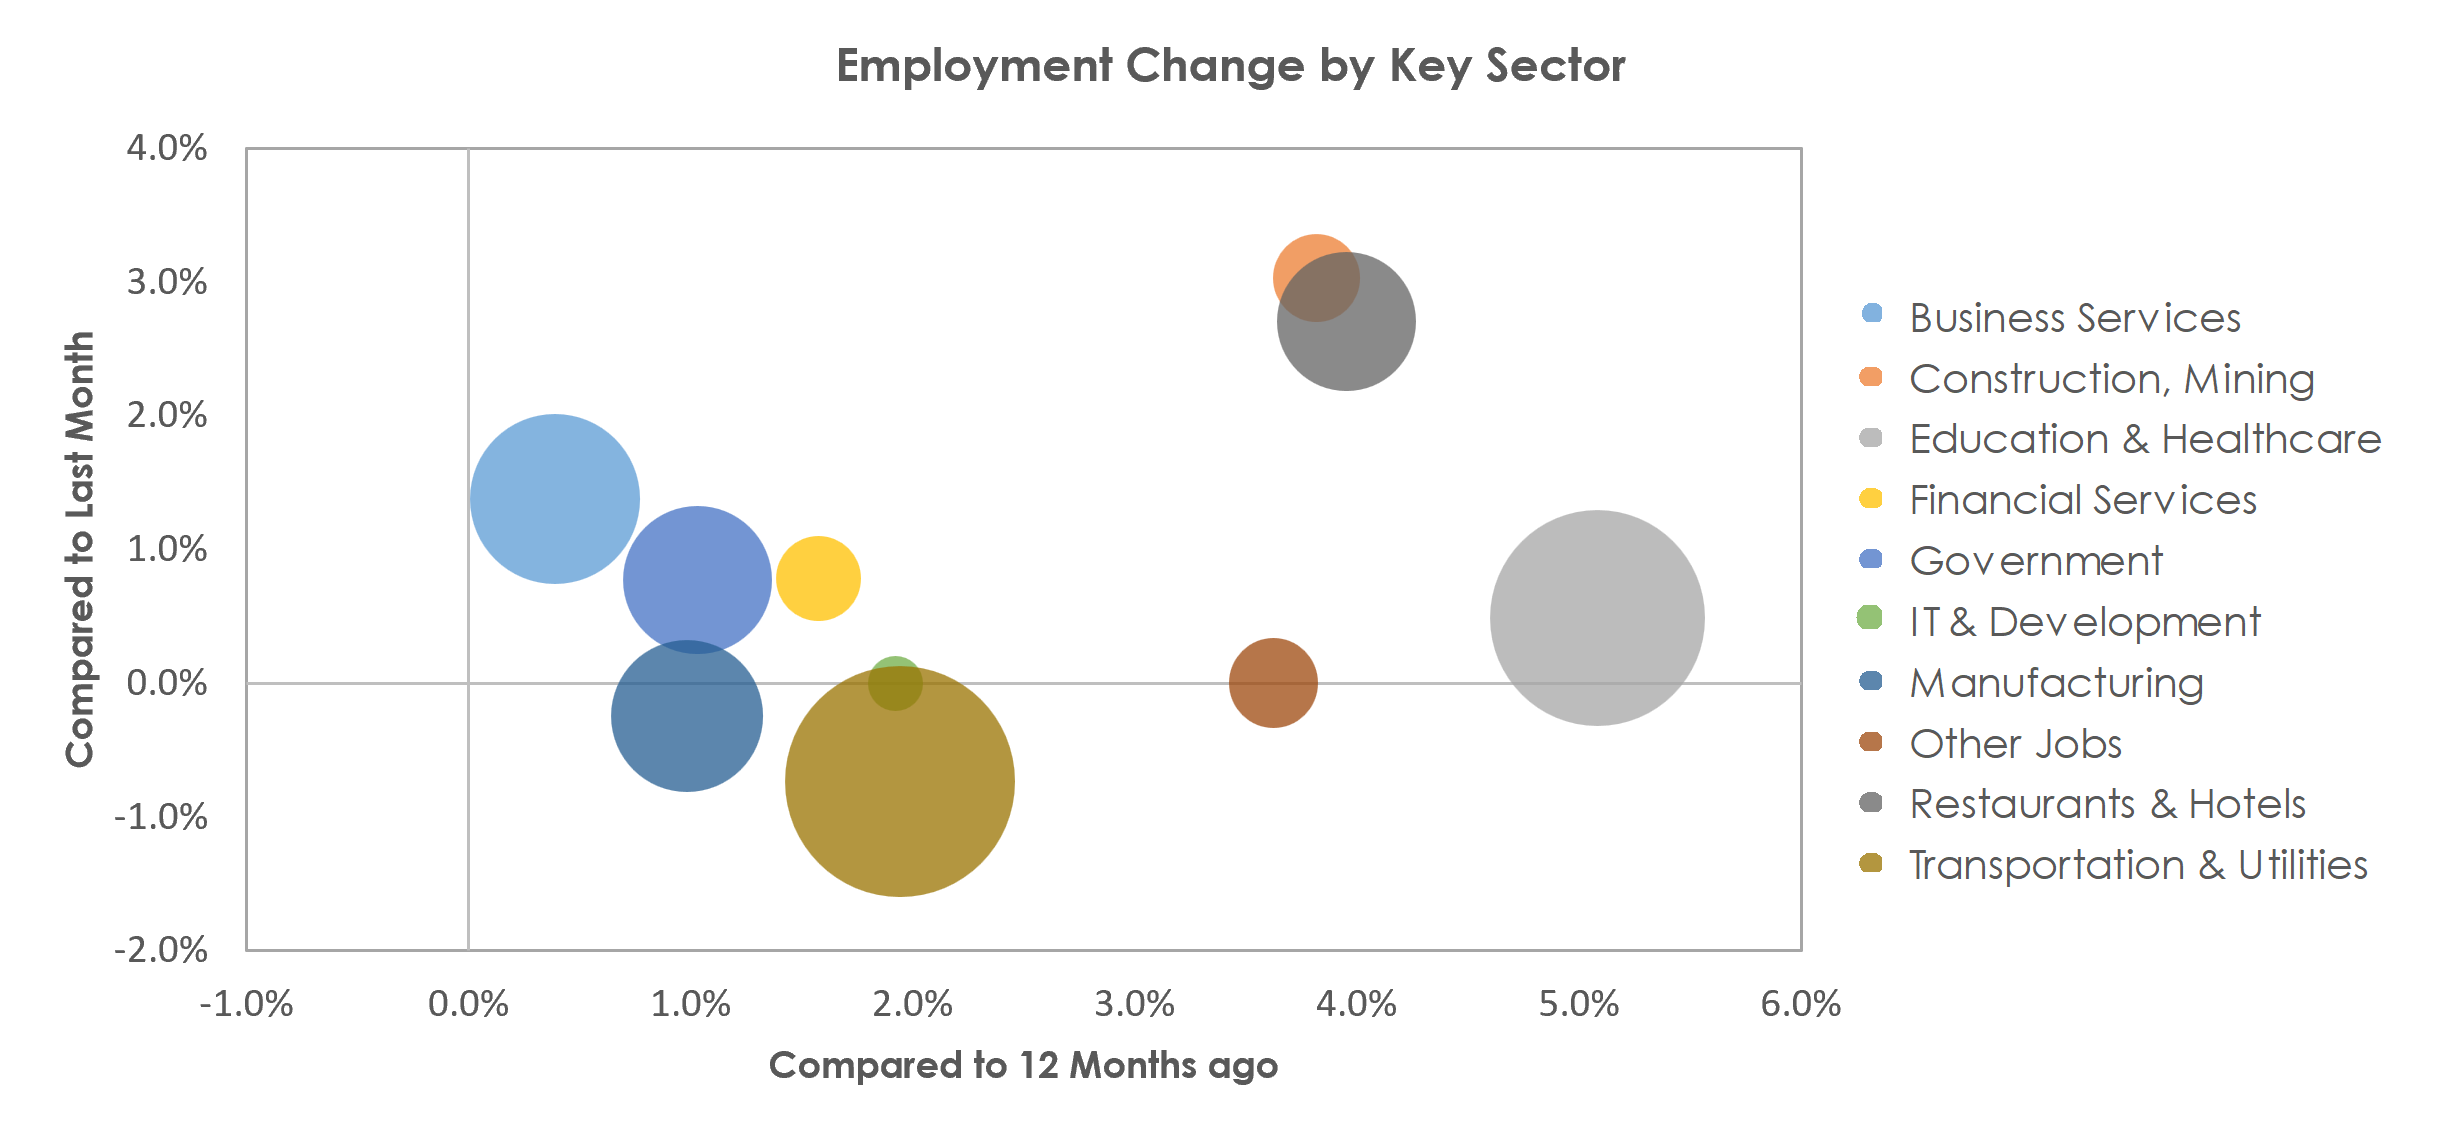 Allentown-Bethlehem-Easton, PA-NJ Unemployment by Industry March 2023